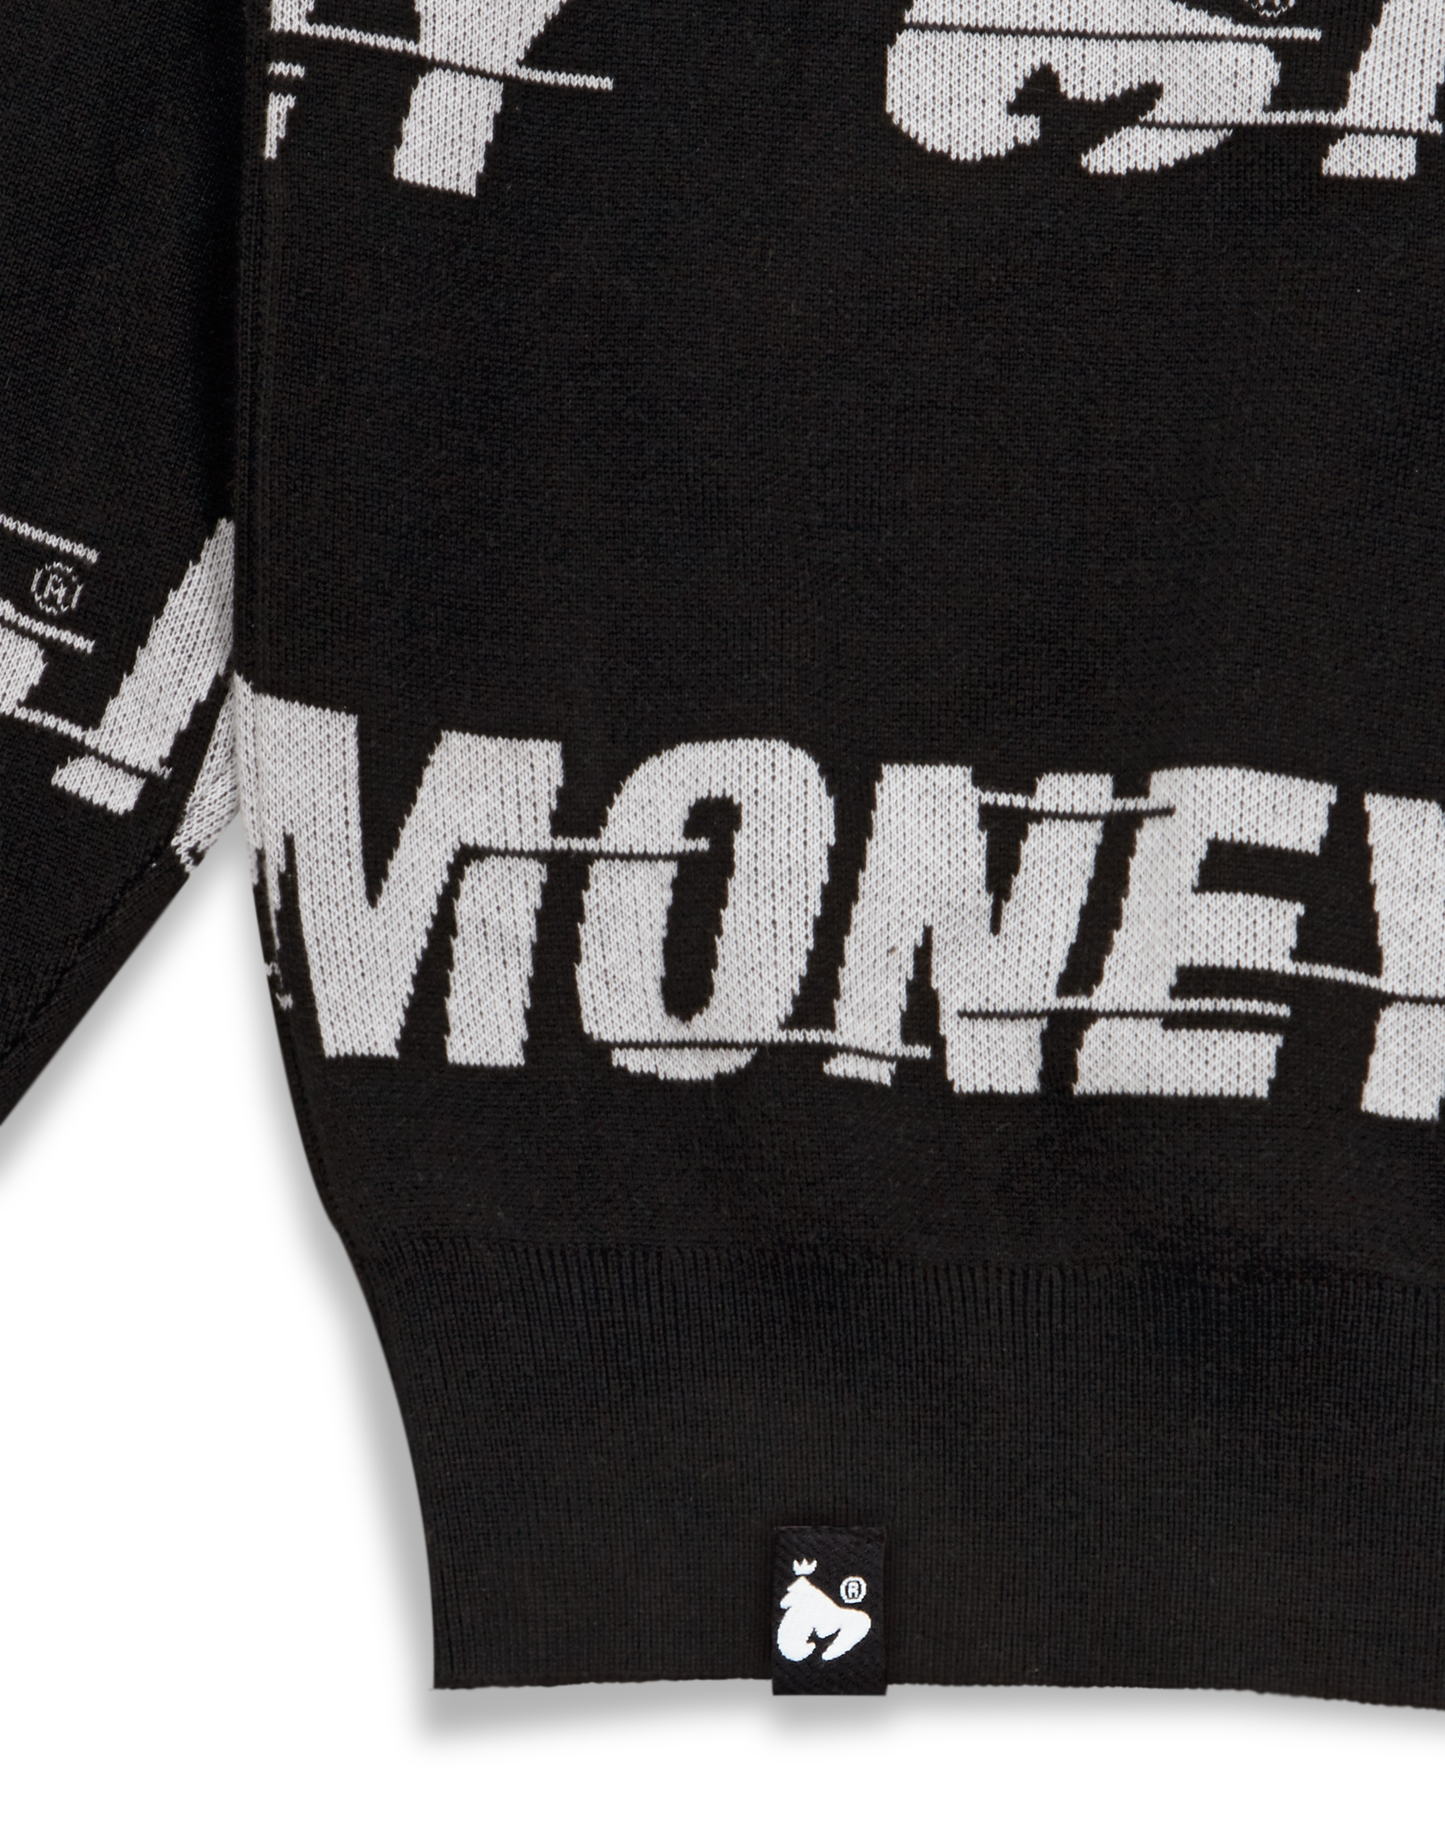 Money Clothing Motion Knit Crew Black